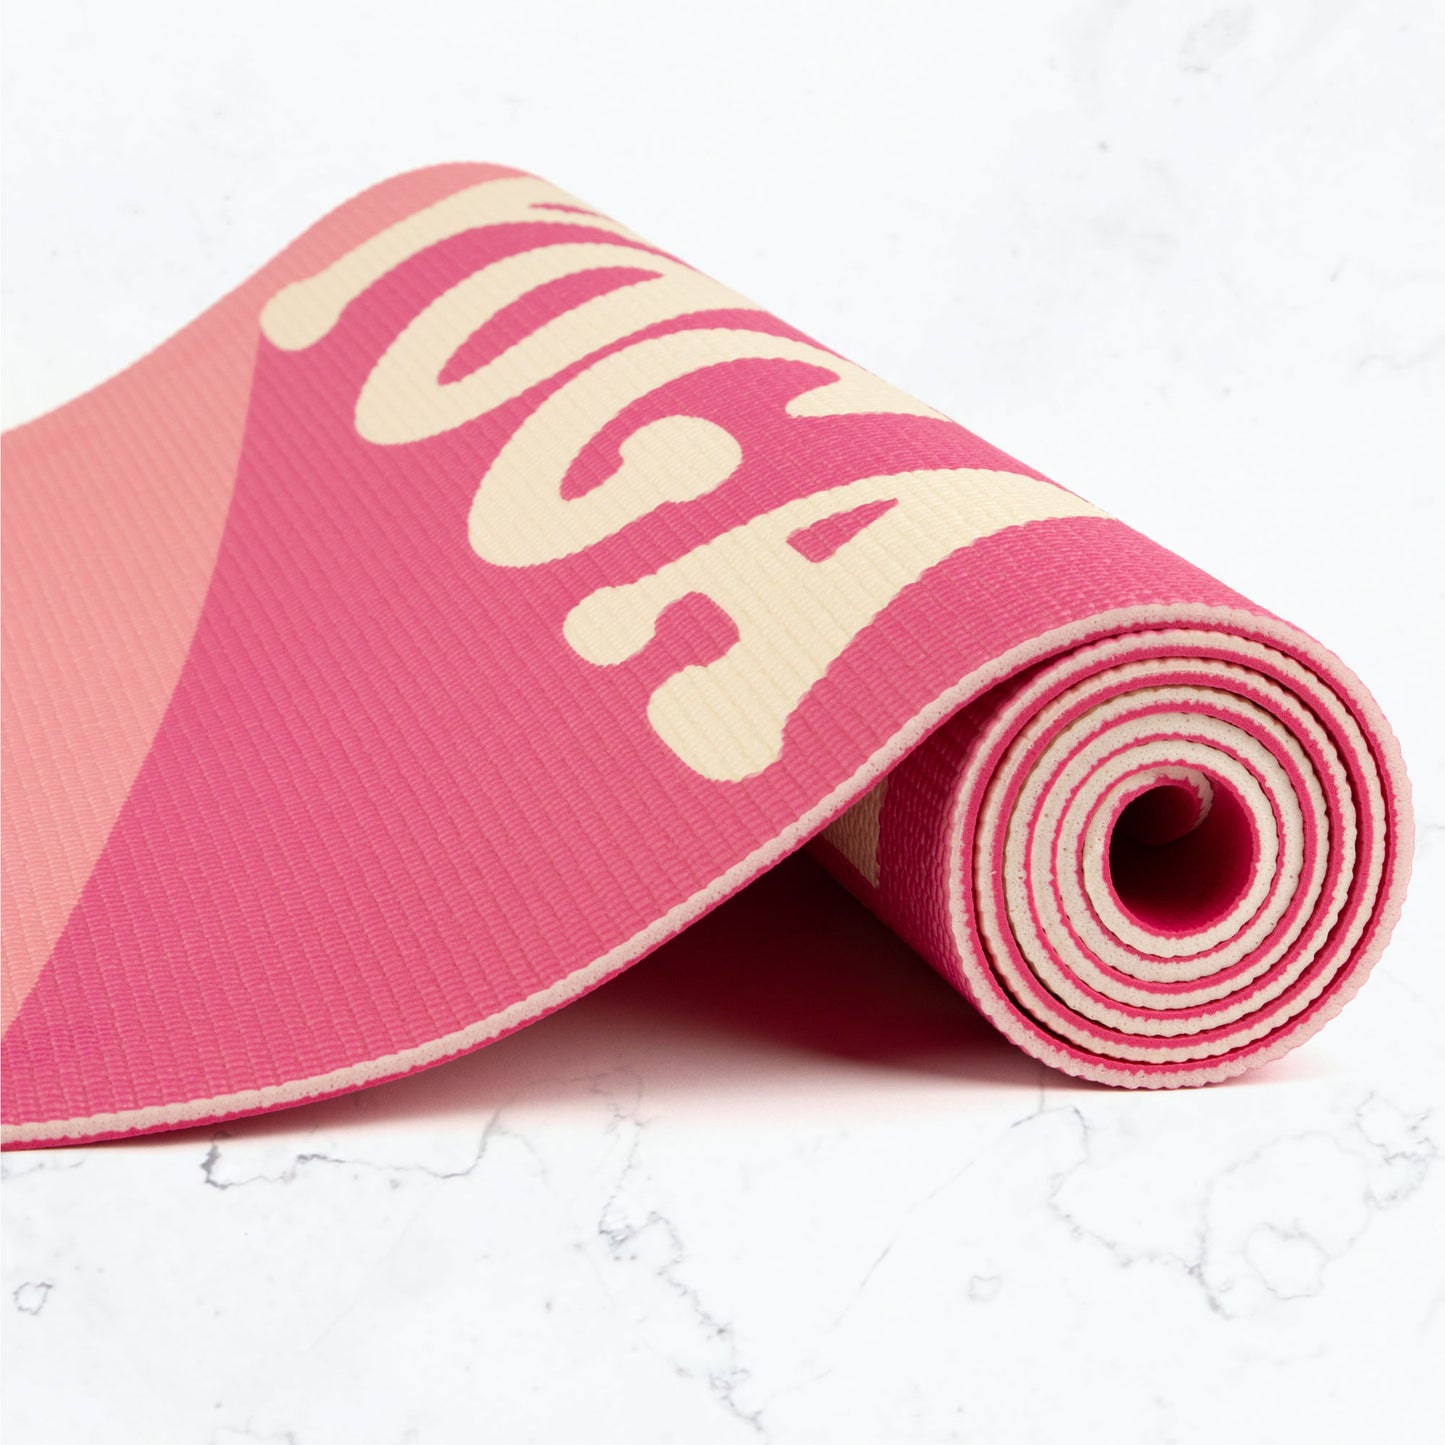 Breast Cancer Awareness Charity CoppaFeel! Yoga Boobs Mat